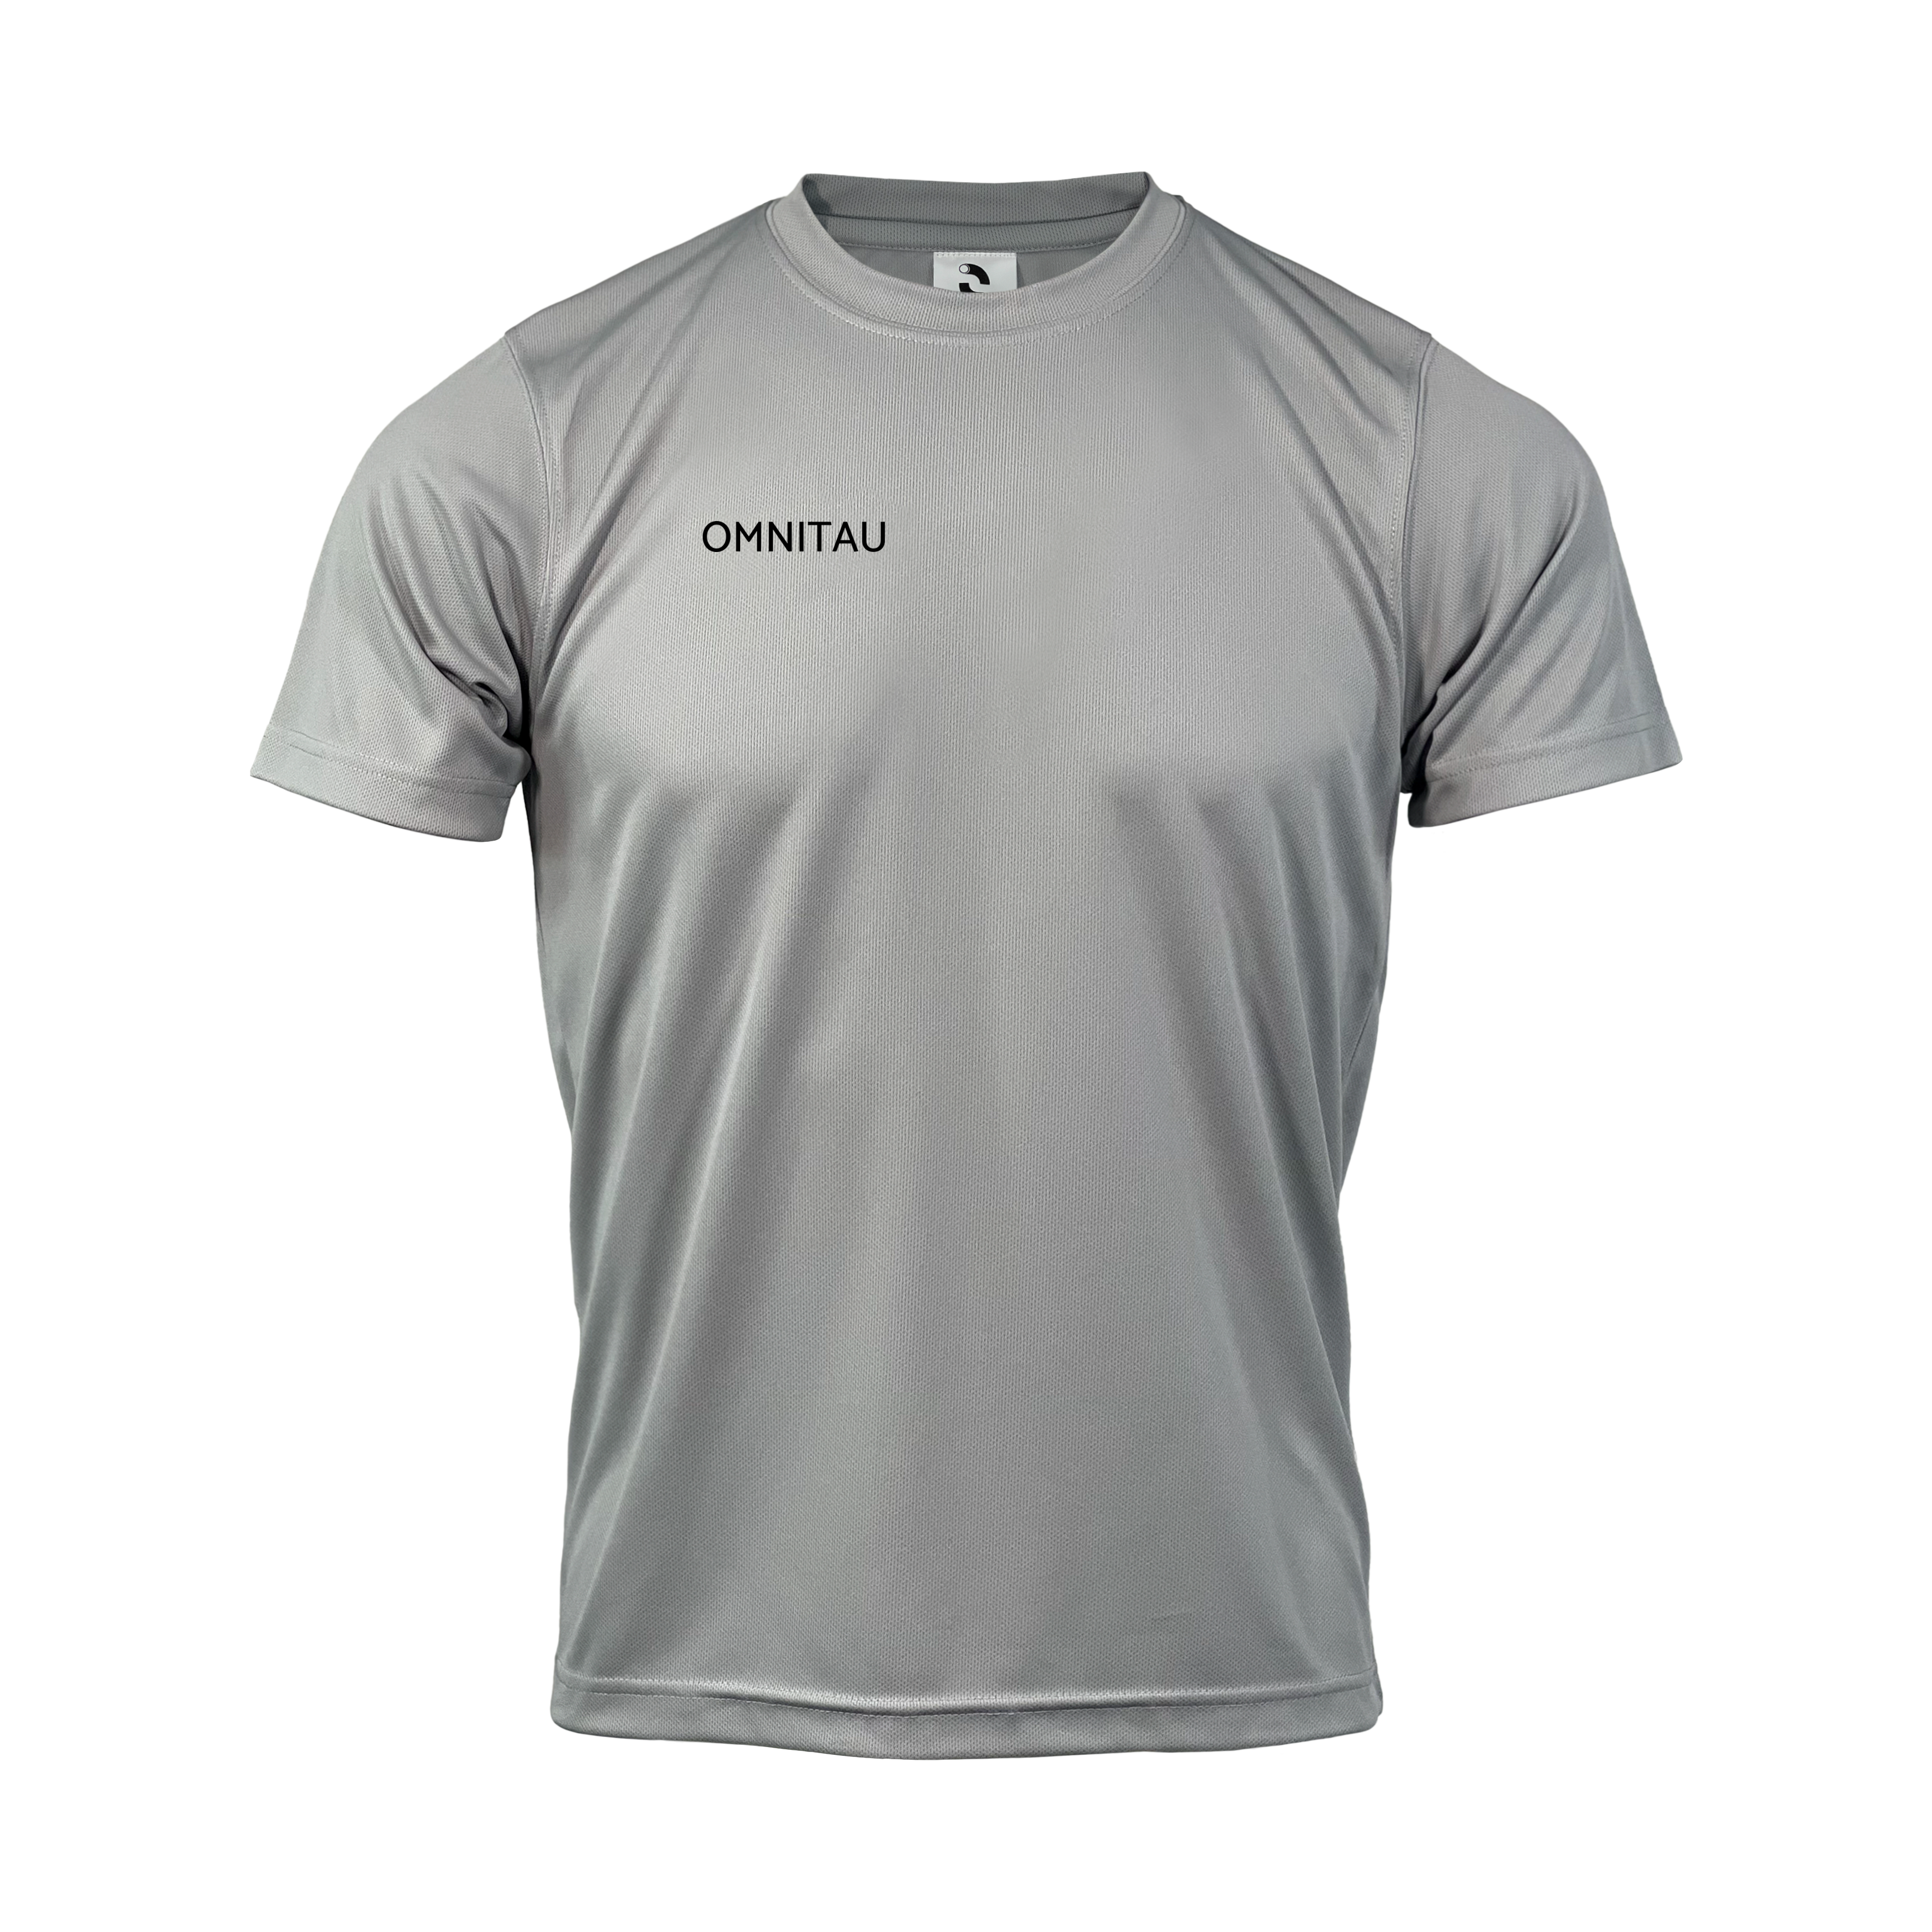 Omnitau Kid's Team Sports Core Football Shirt - Heather Grey